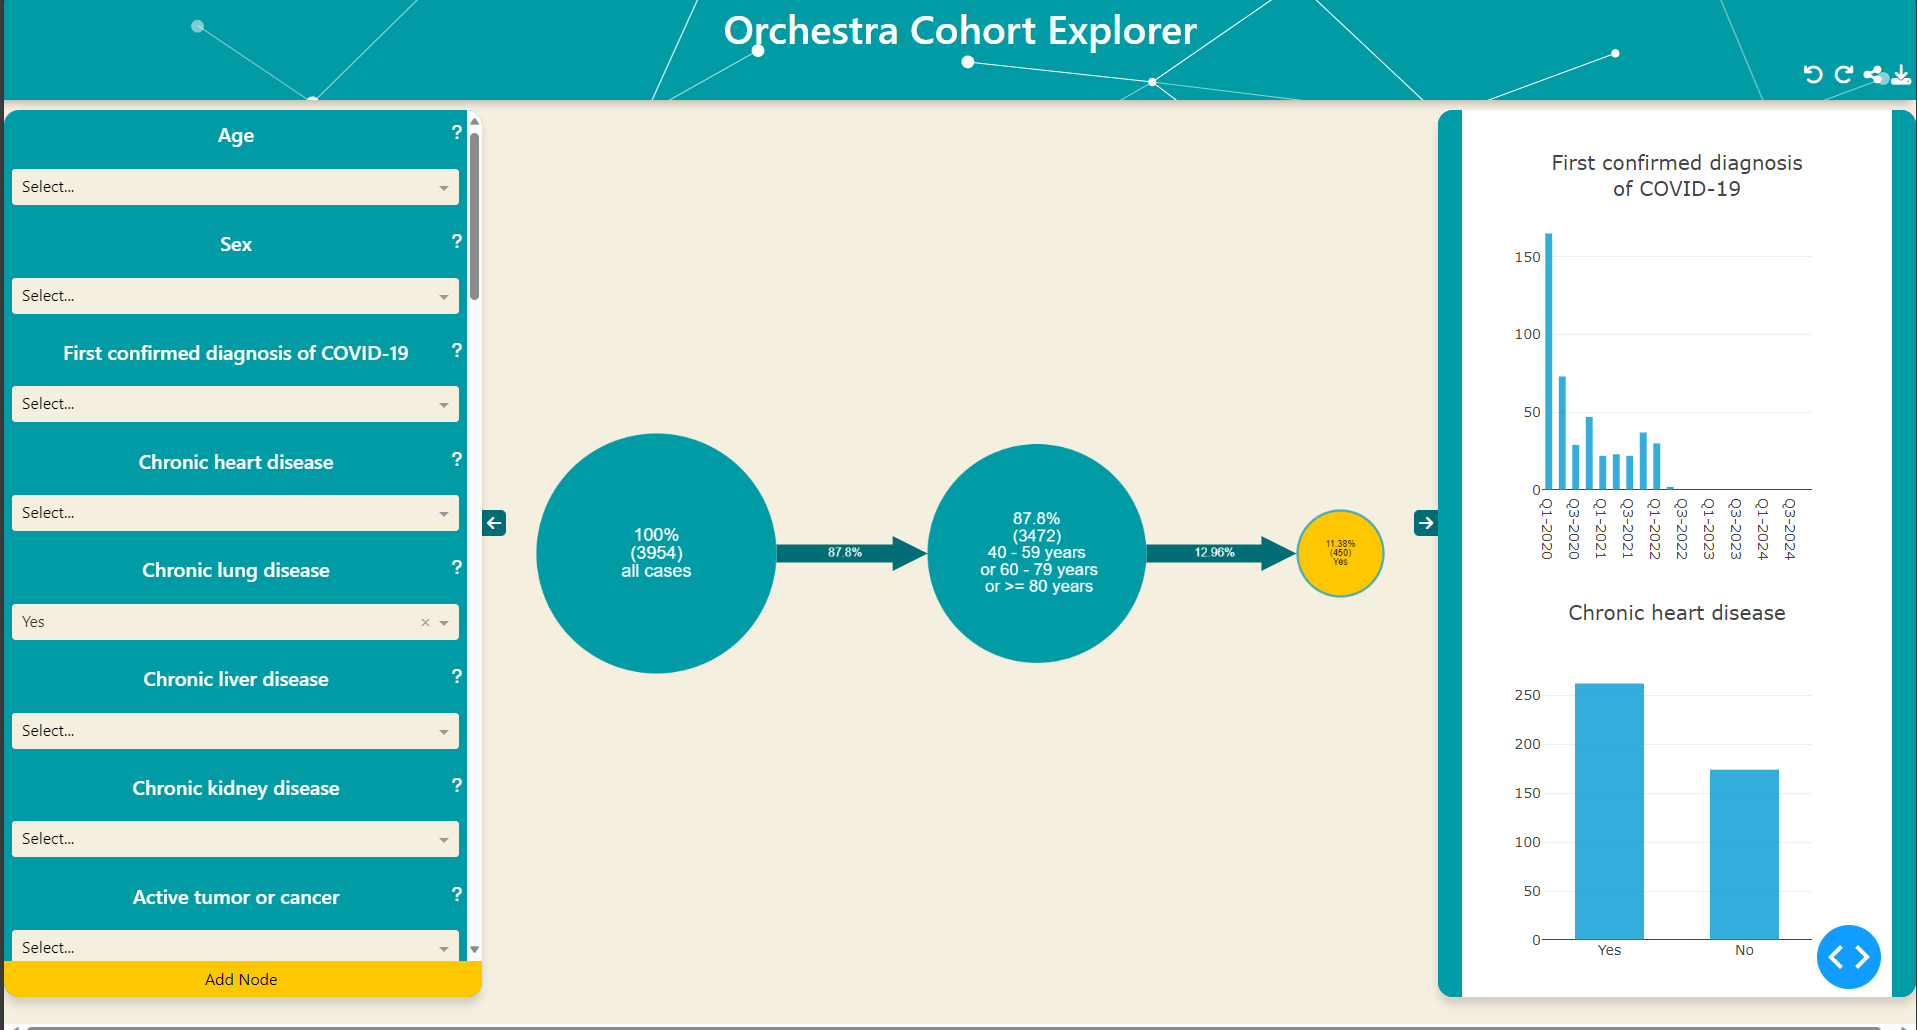 Explore our public data with the ORCHESTRA Cohort Explorer